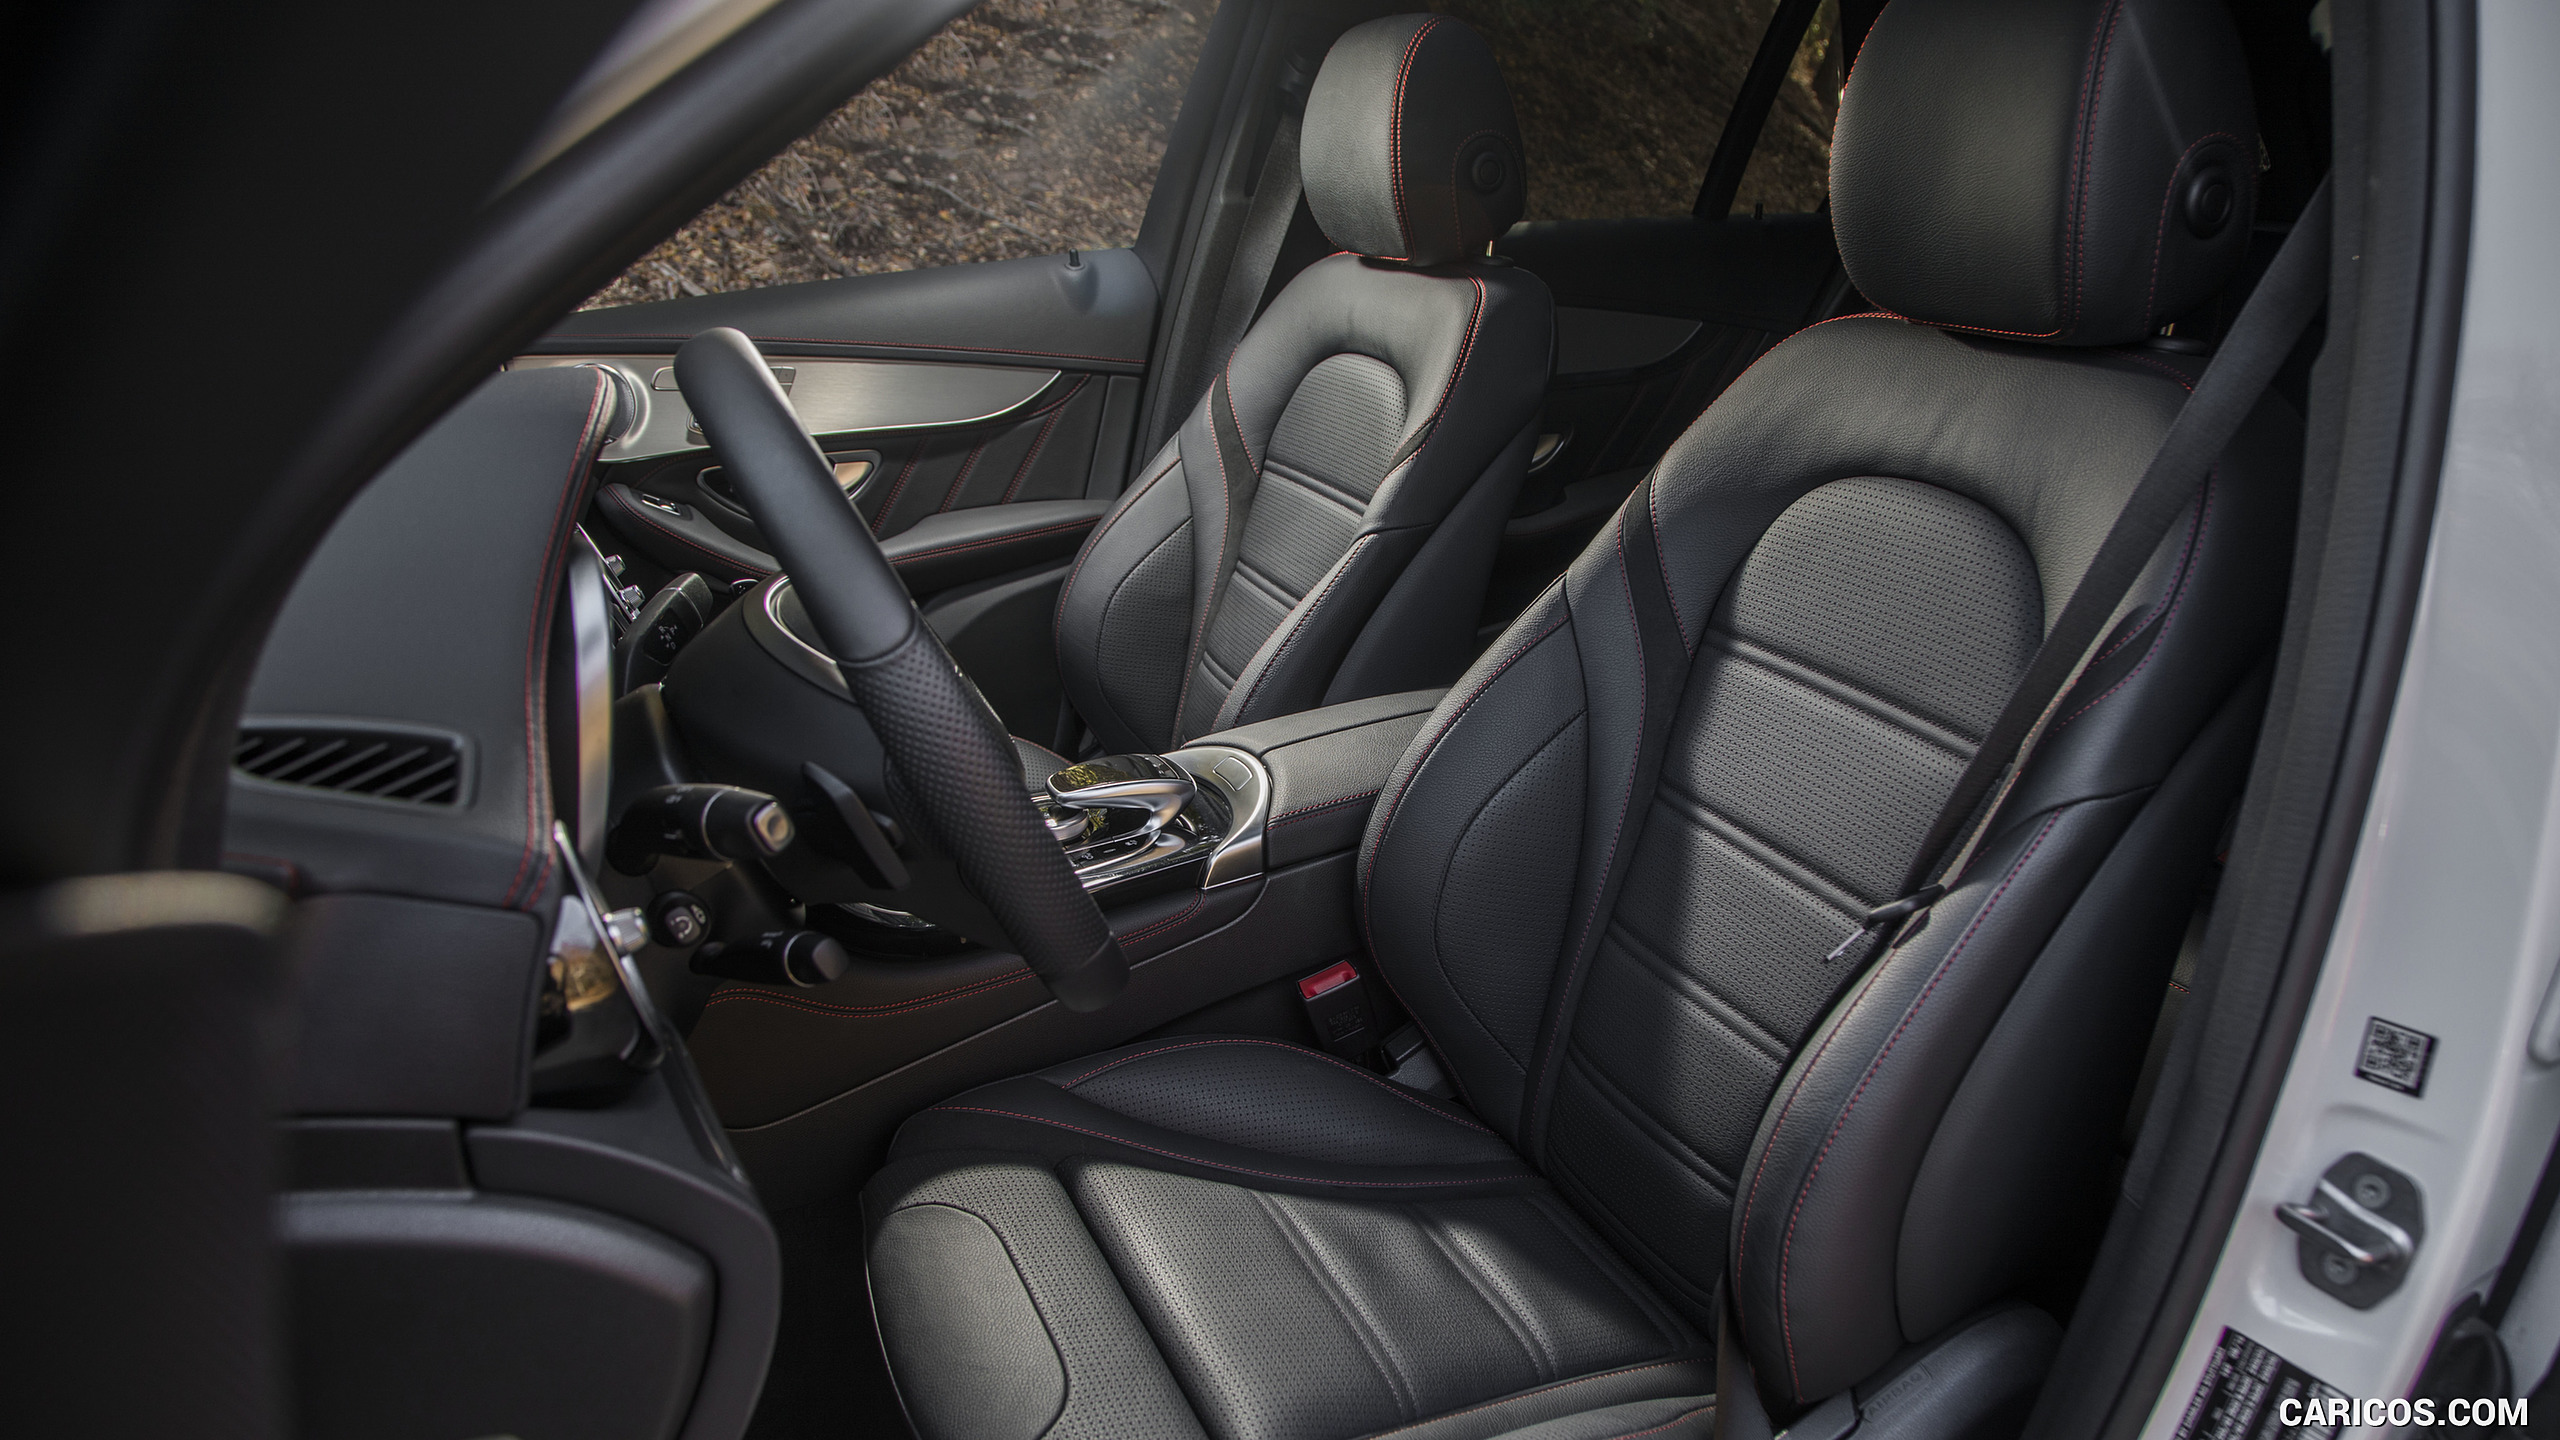 2017 Mercedes-AMG GLC 43 (US-Spec) - Interior, Front Seats, #107 of 108